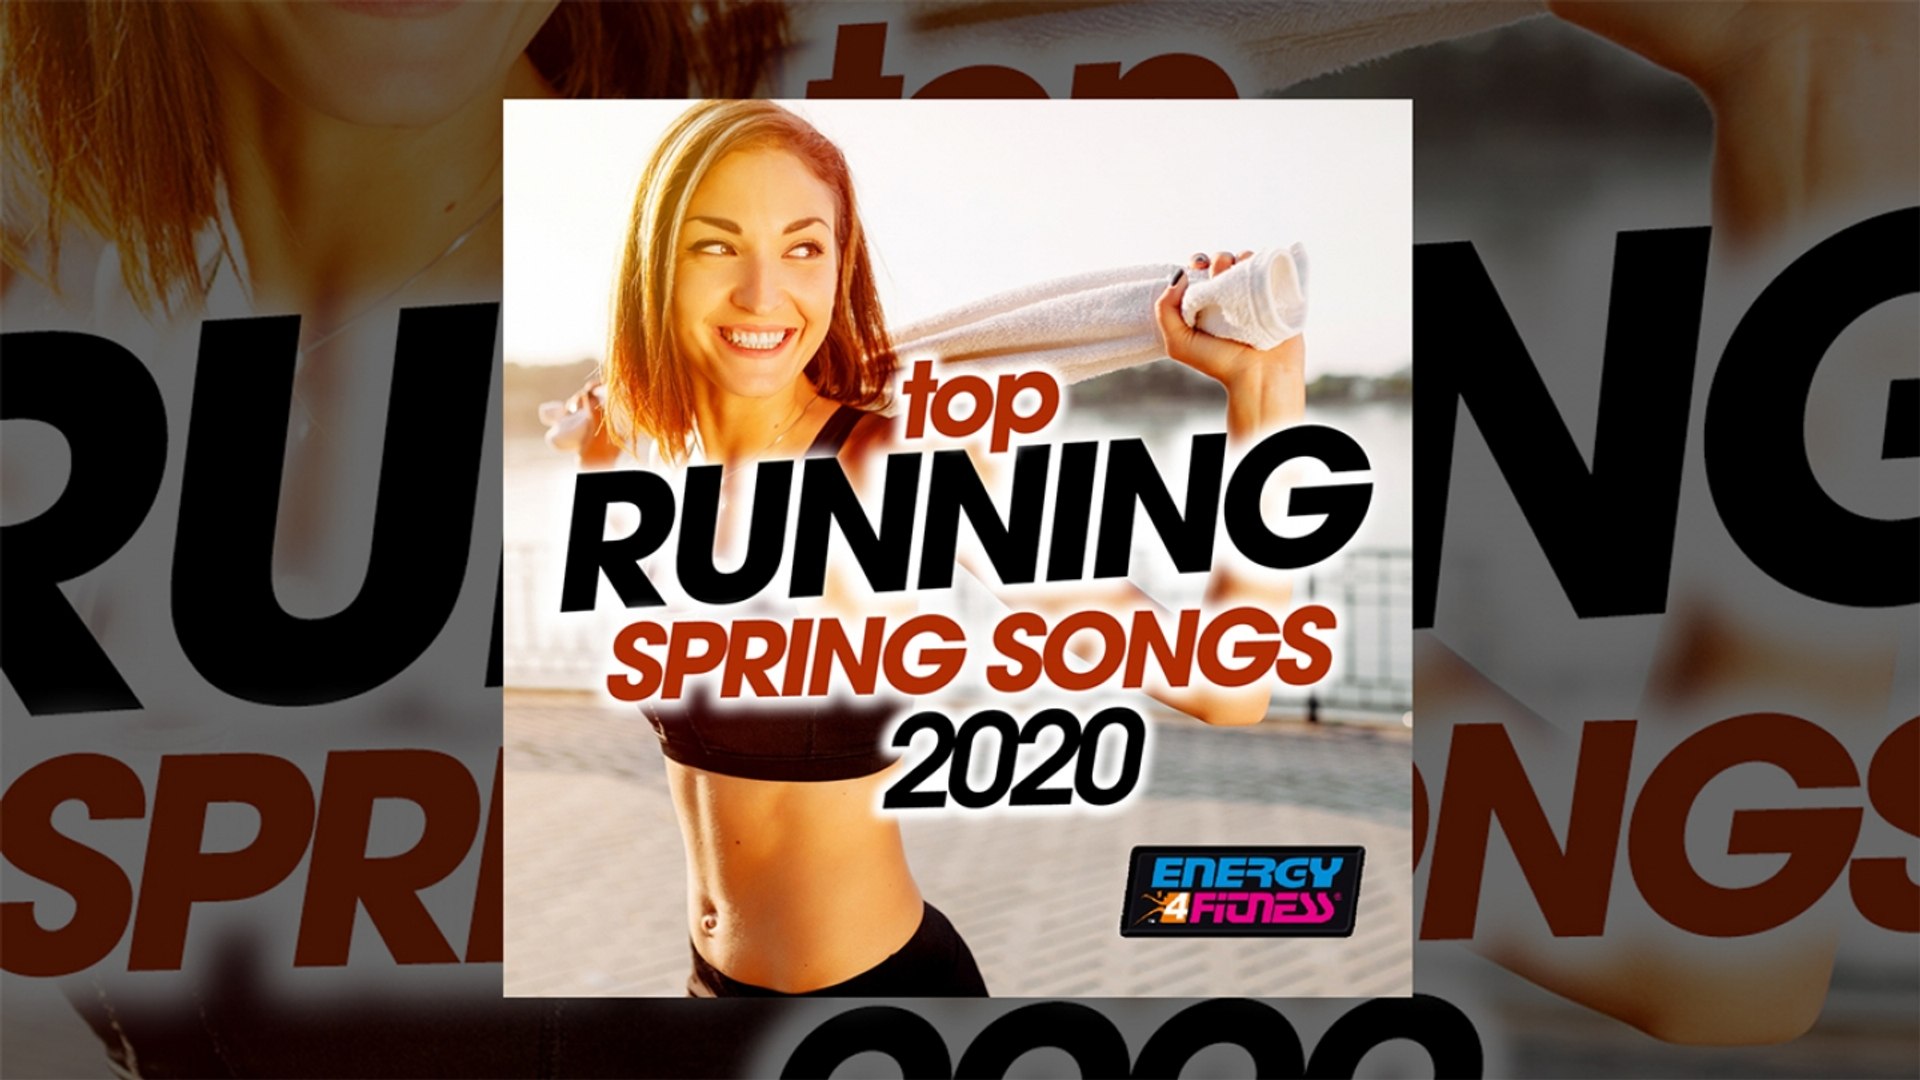 E4F - Top Running Spring Songs 2020 - Fitness & Music 2020